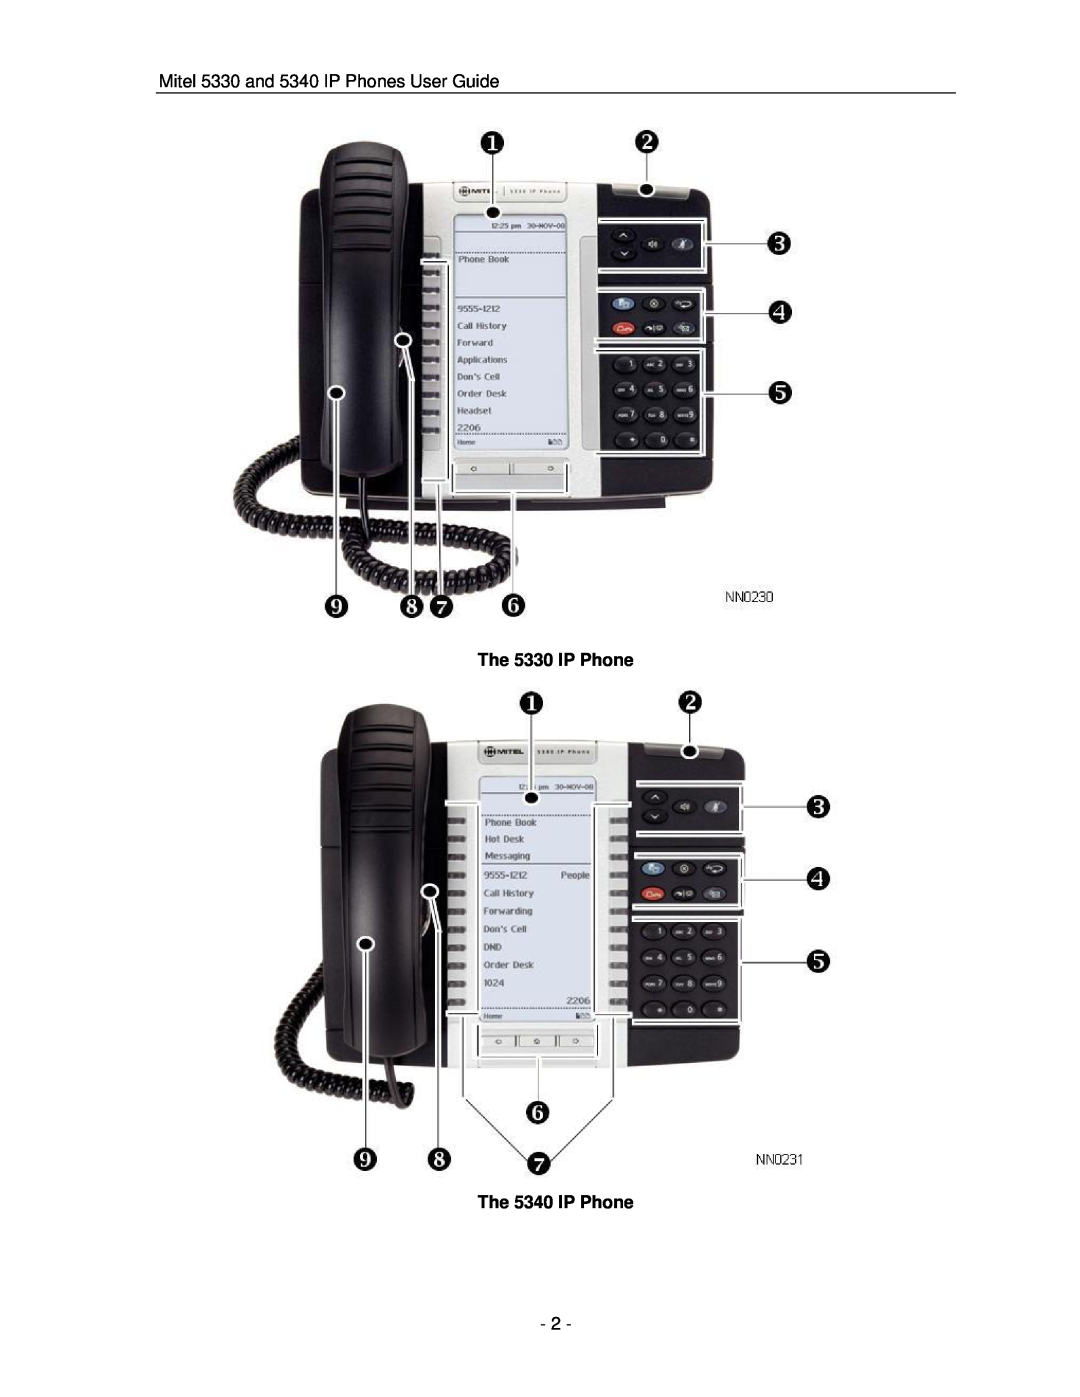 Mitel manual Mitel 5330 and 5340 IP Phones User Guide, The 5330 IP Phone The 5340 IP Phone 